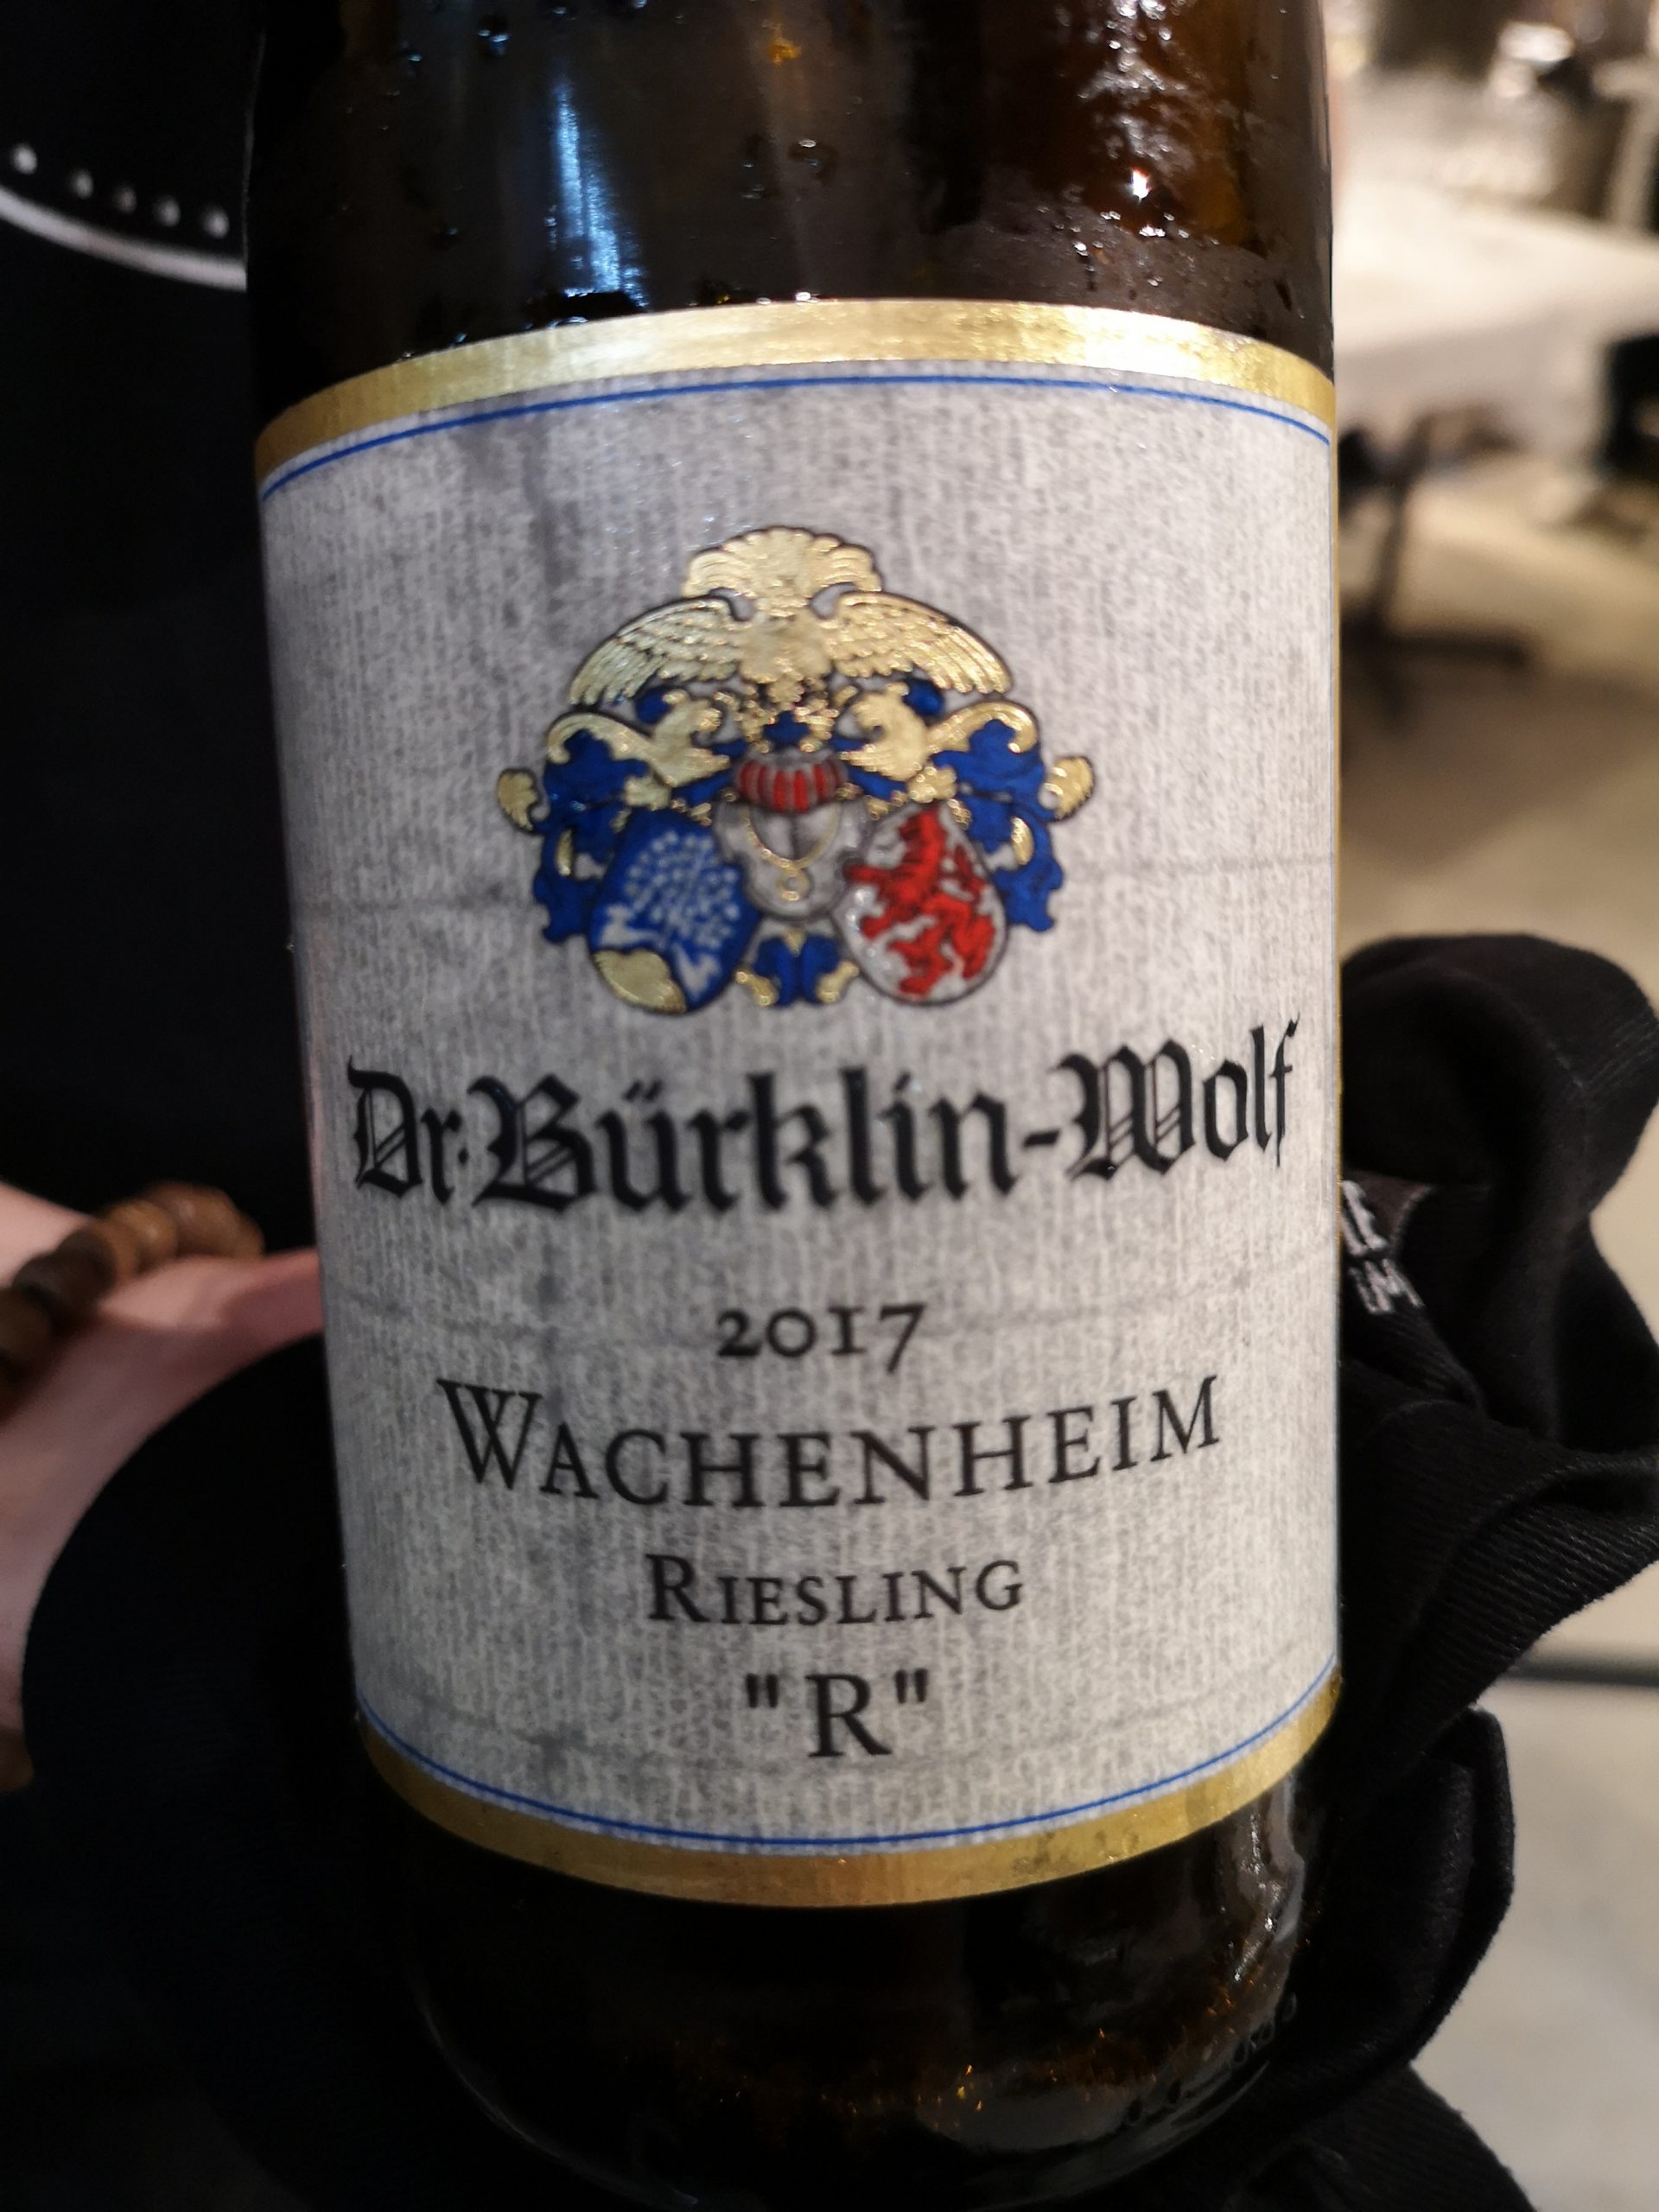 2017 Riesling R Wachenheim | Bürklin-Wolf